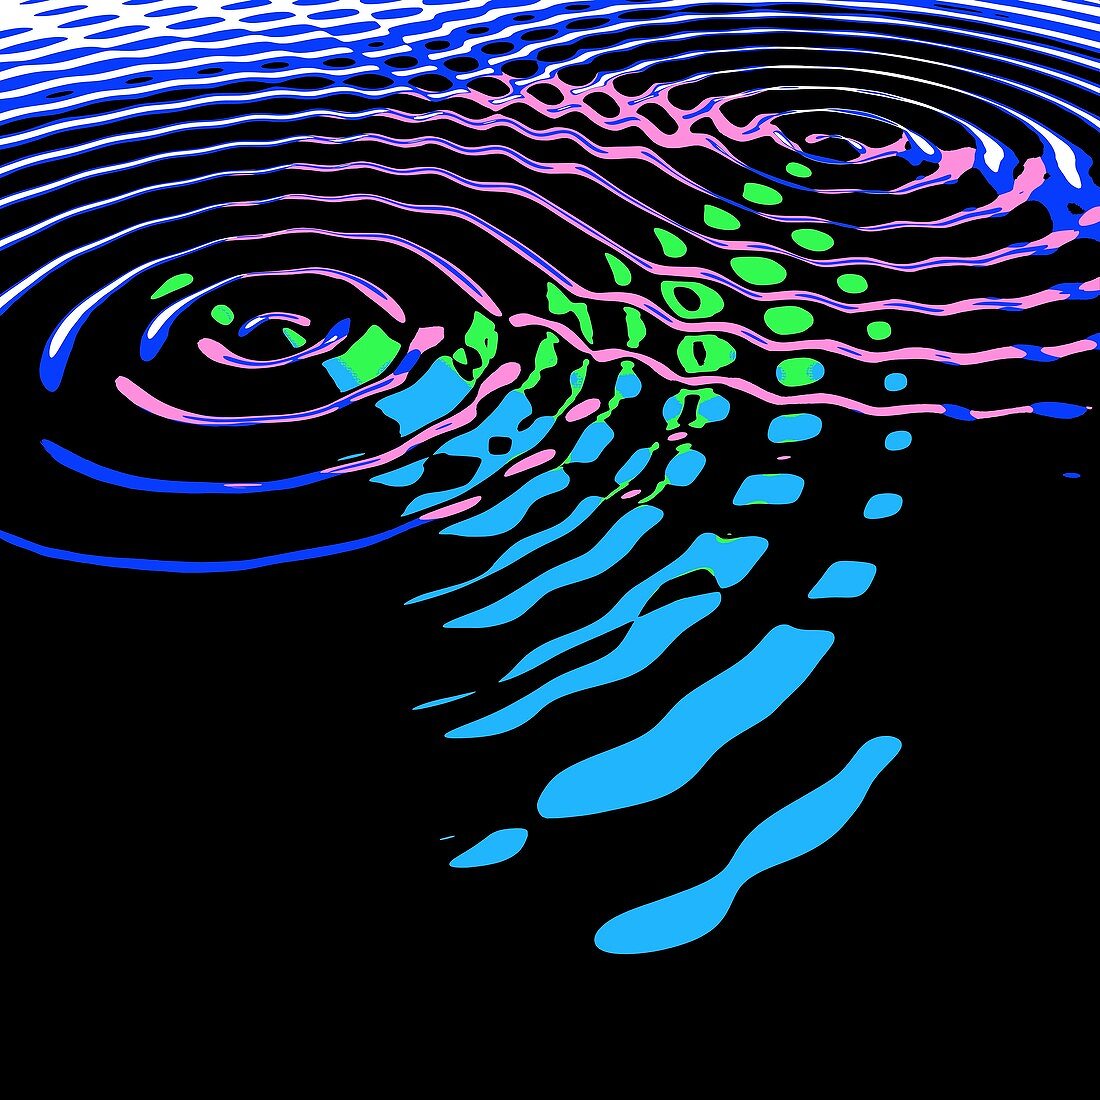 Circular wave interference,illustration